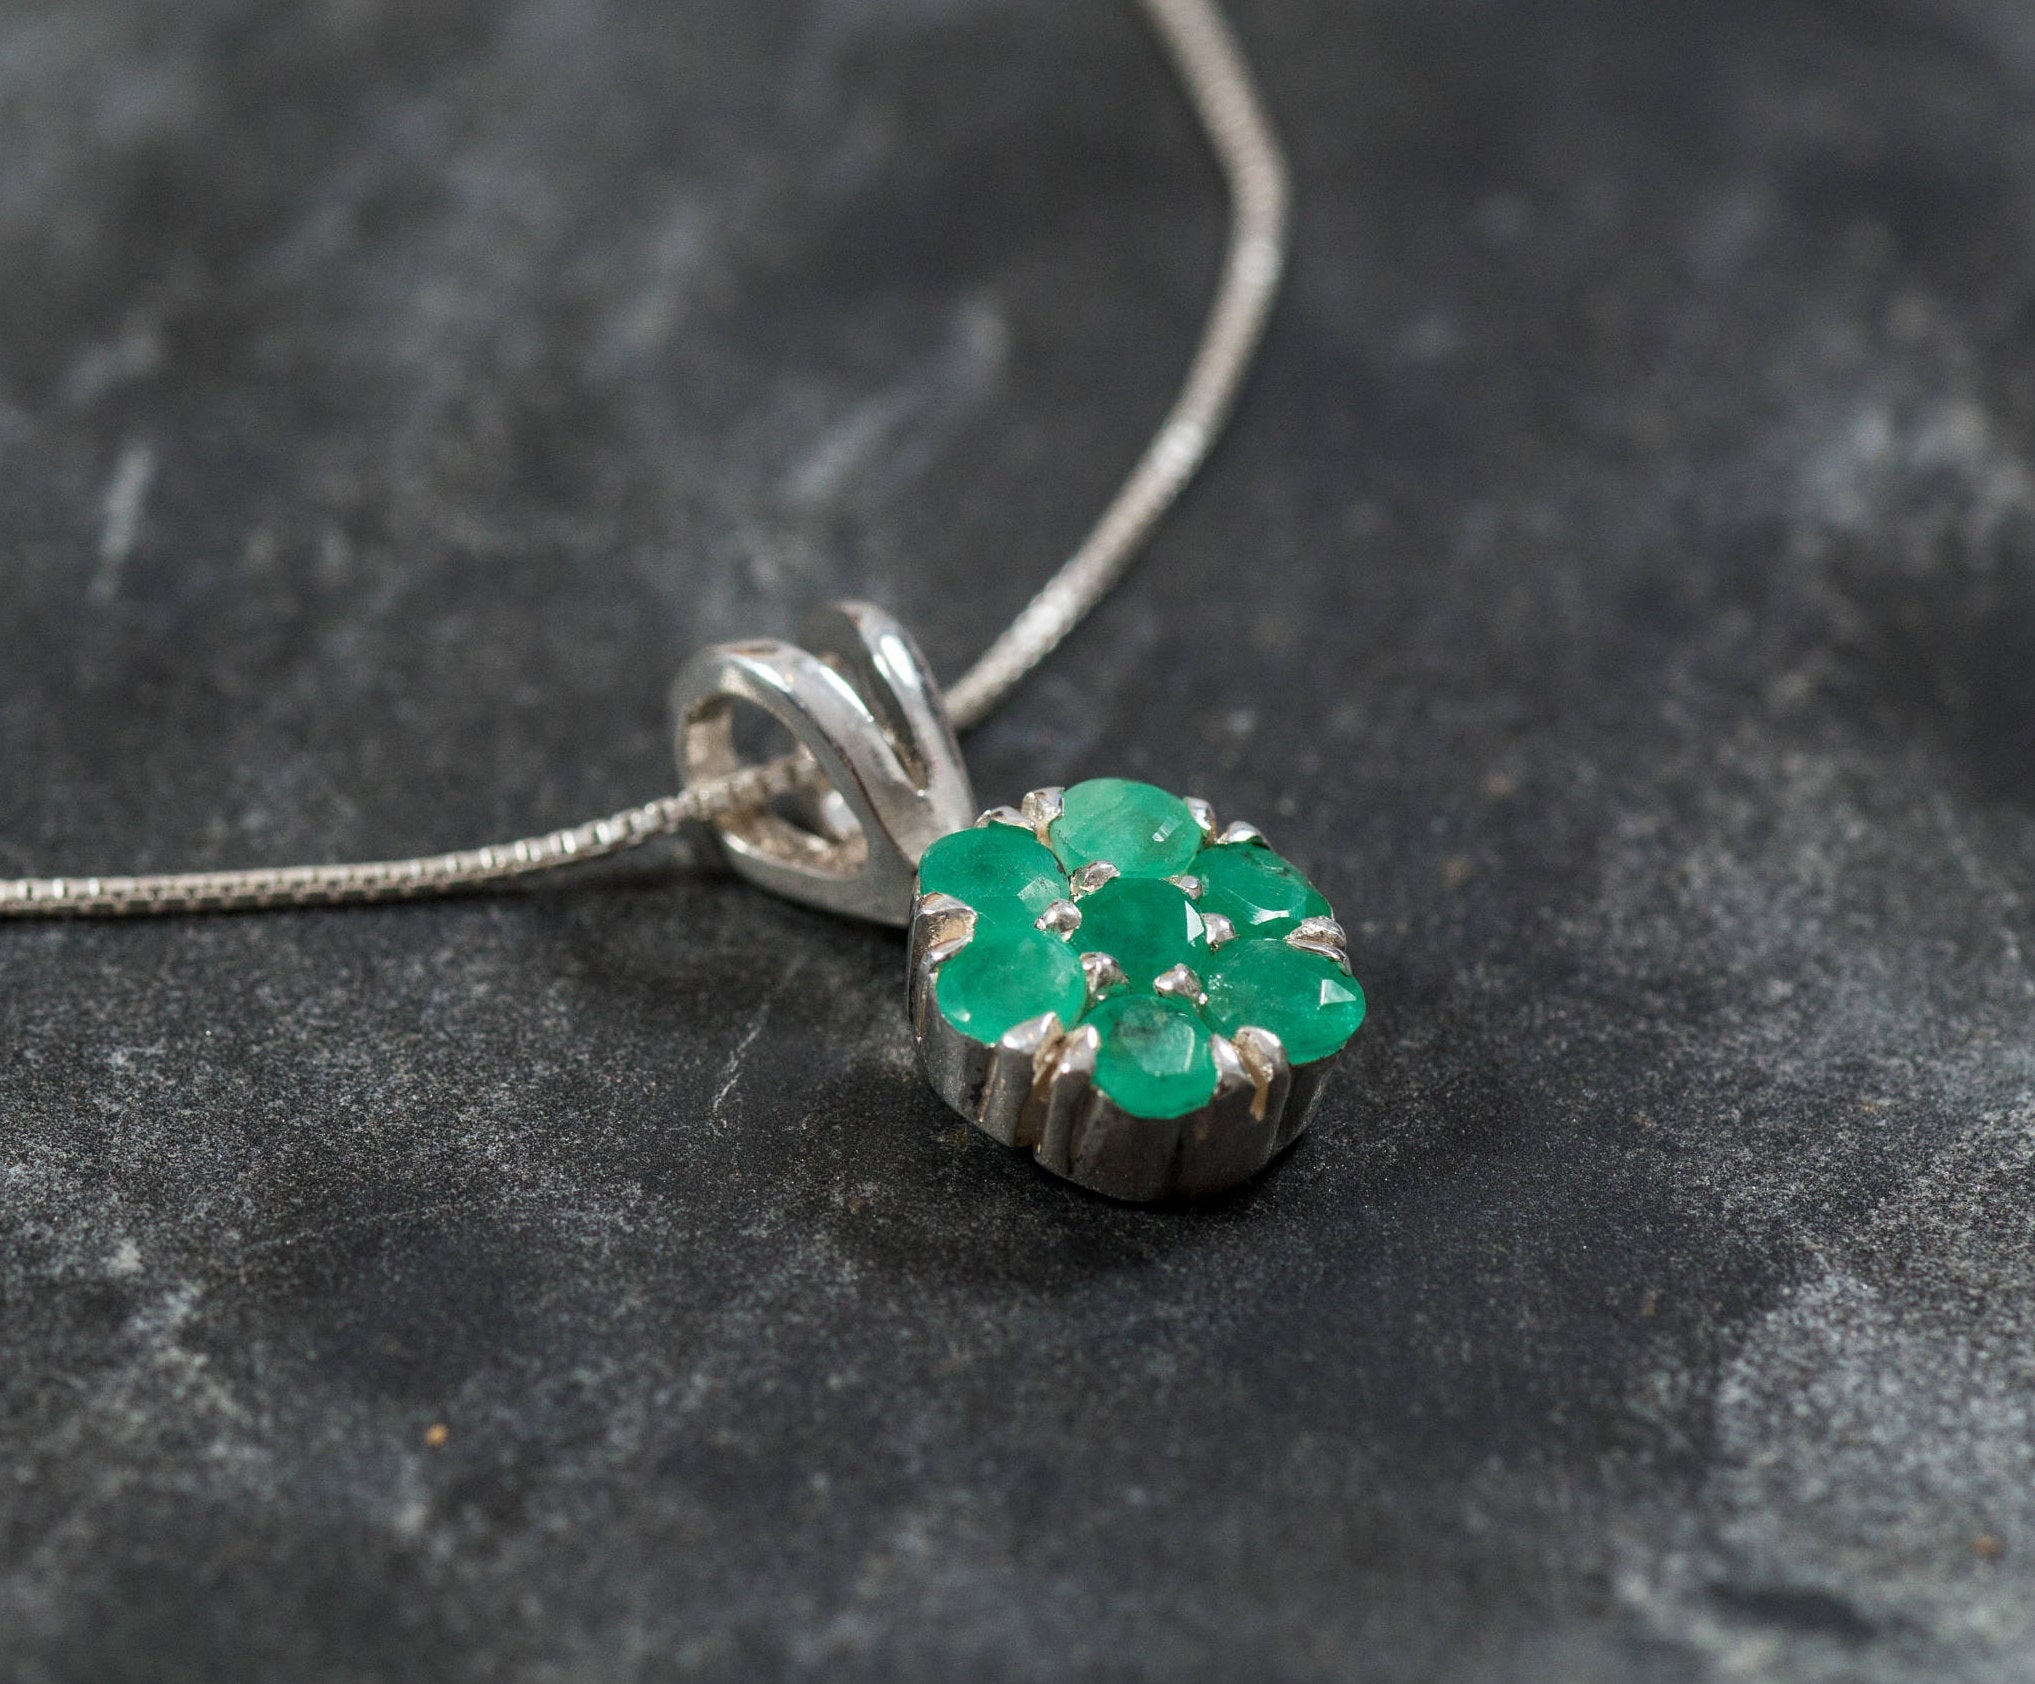 Emerald Pendant, Natural Pendant, Flower Pendant, May Birthstone, Genuine Emerald, Real Emerald Pendant, Pendant and Chain, Silver Pendant